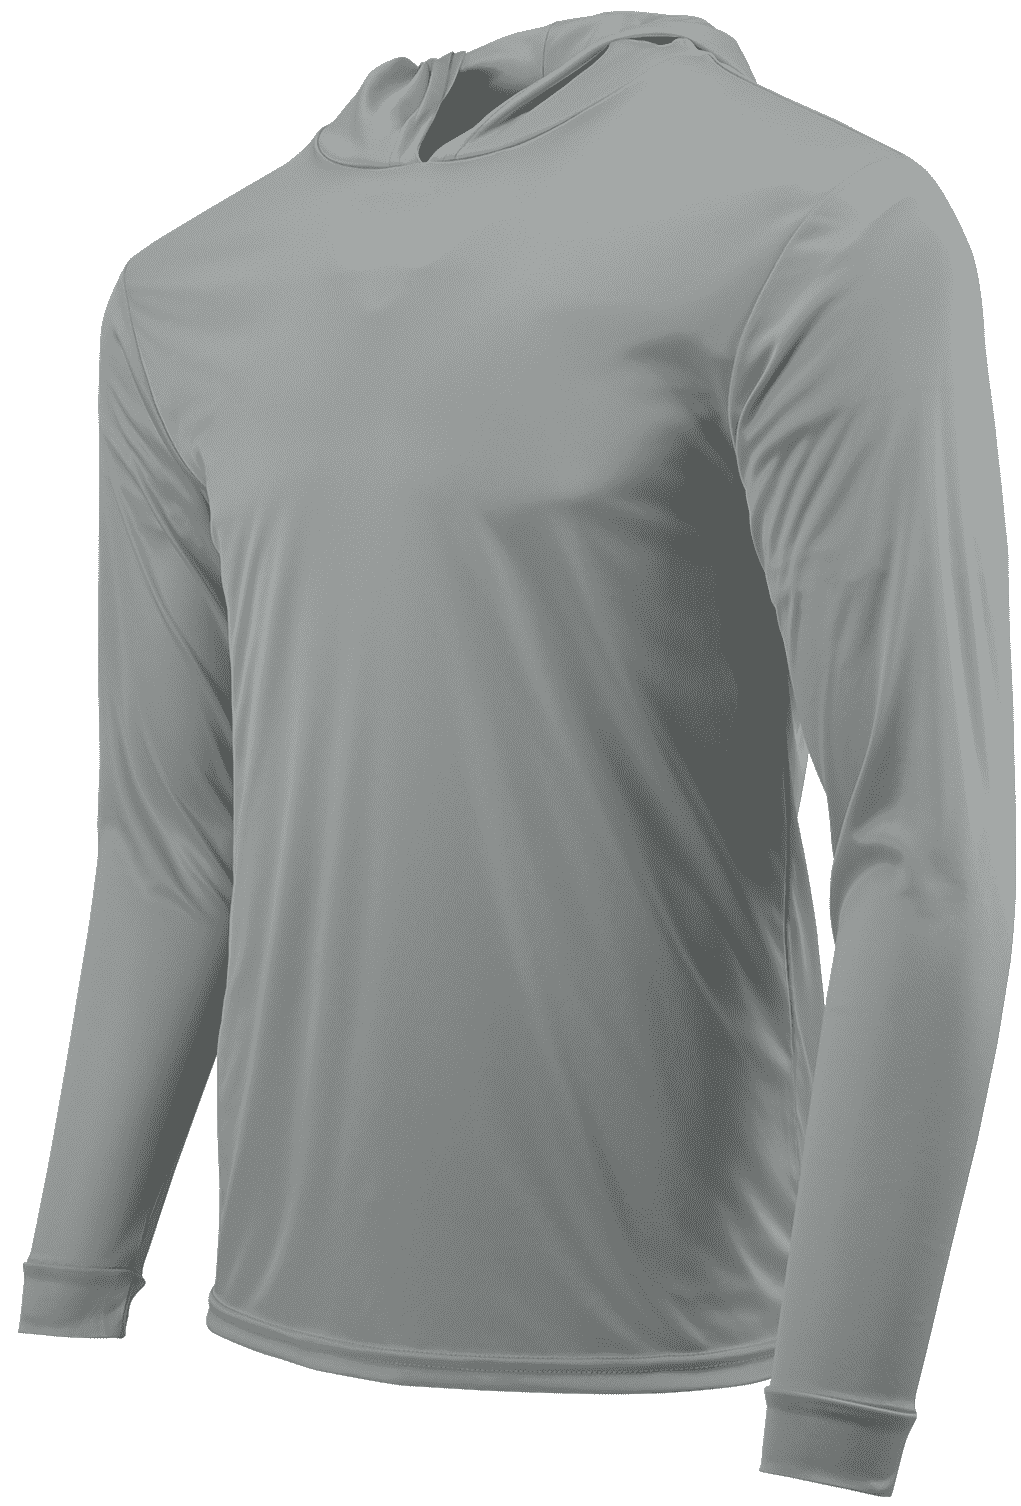 Paragon 220 Adult Long Sleeve Performance Hood - Medium Gray - HIT a Double - 1